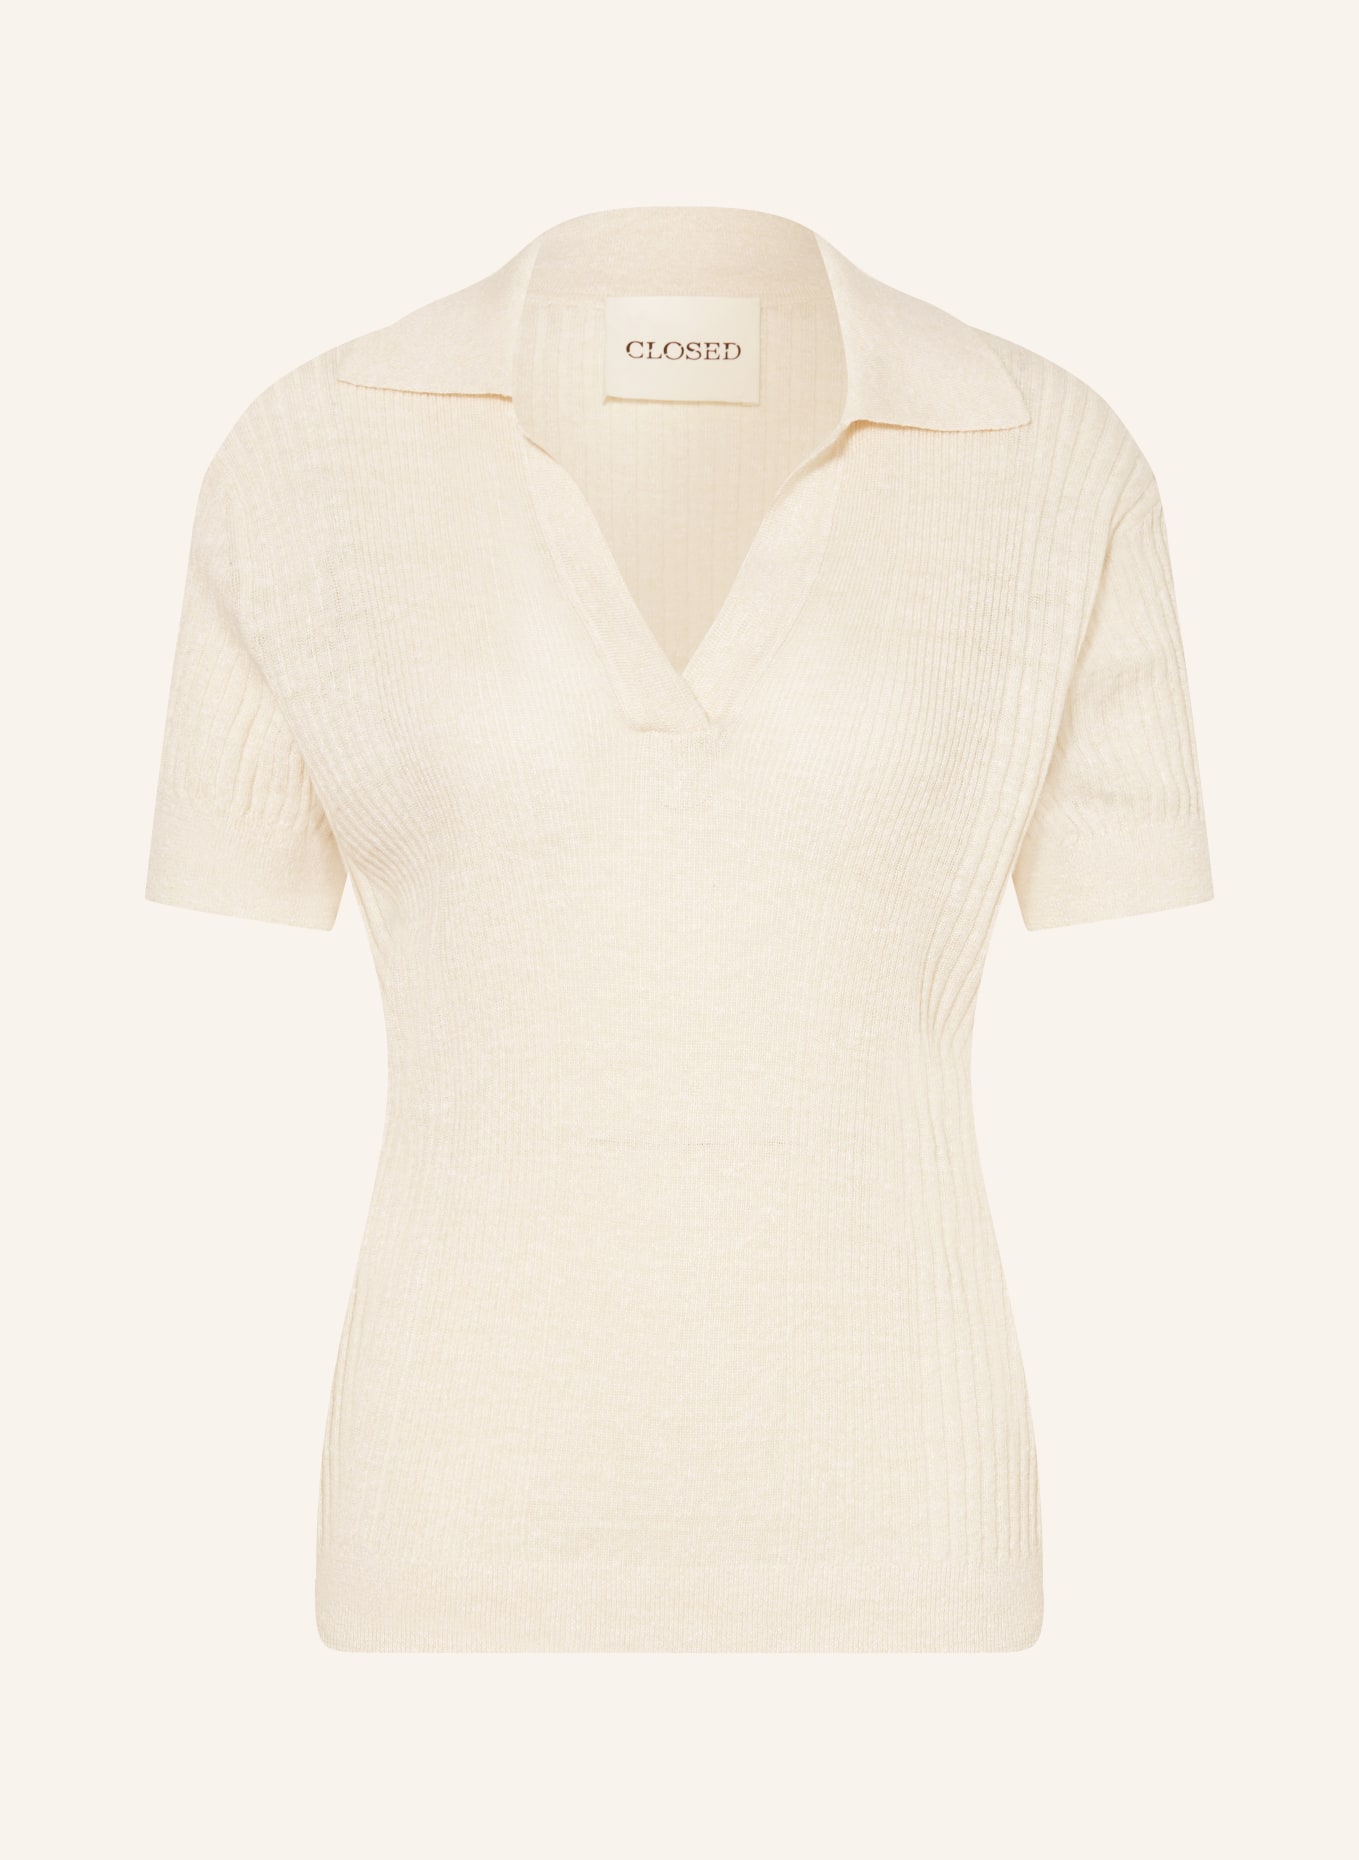 CLOSED Strickshirt, Farbe: CREME (Bild 1)